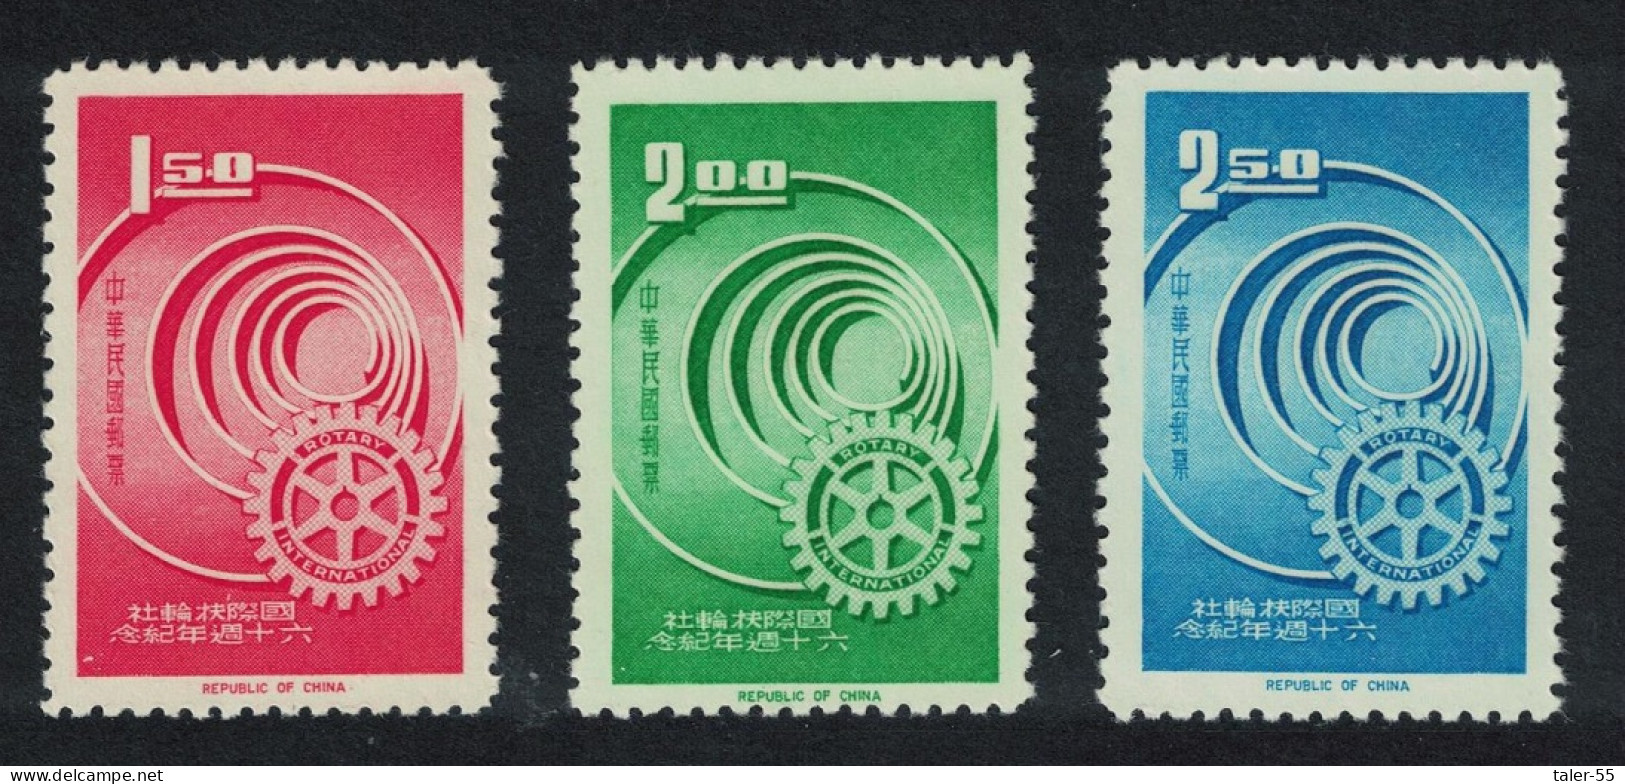 Taiwan Rotary International 3v 1965 MNH SG#538-540 MI#560-562 - Ongebruikt